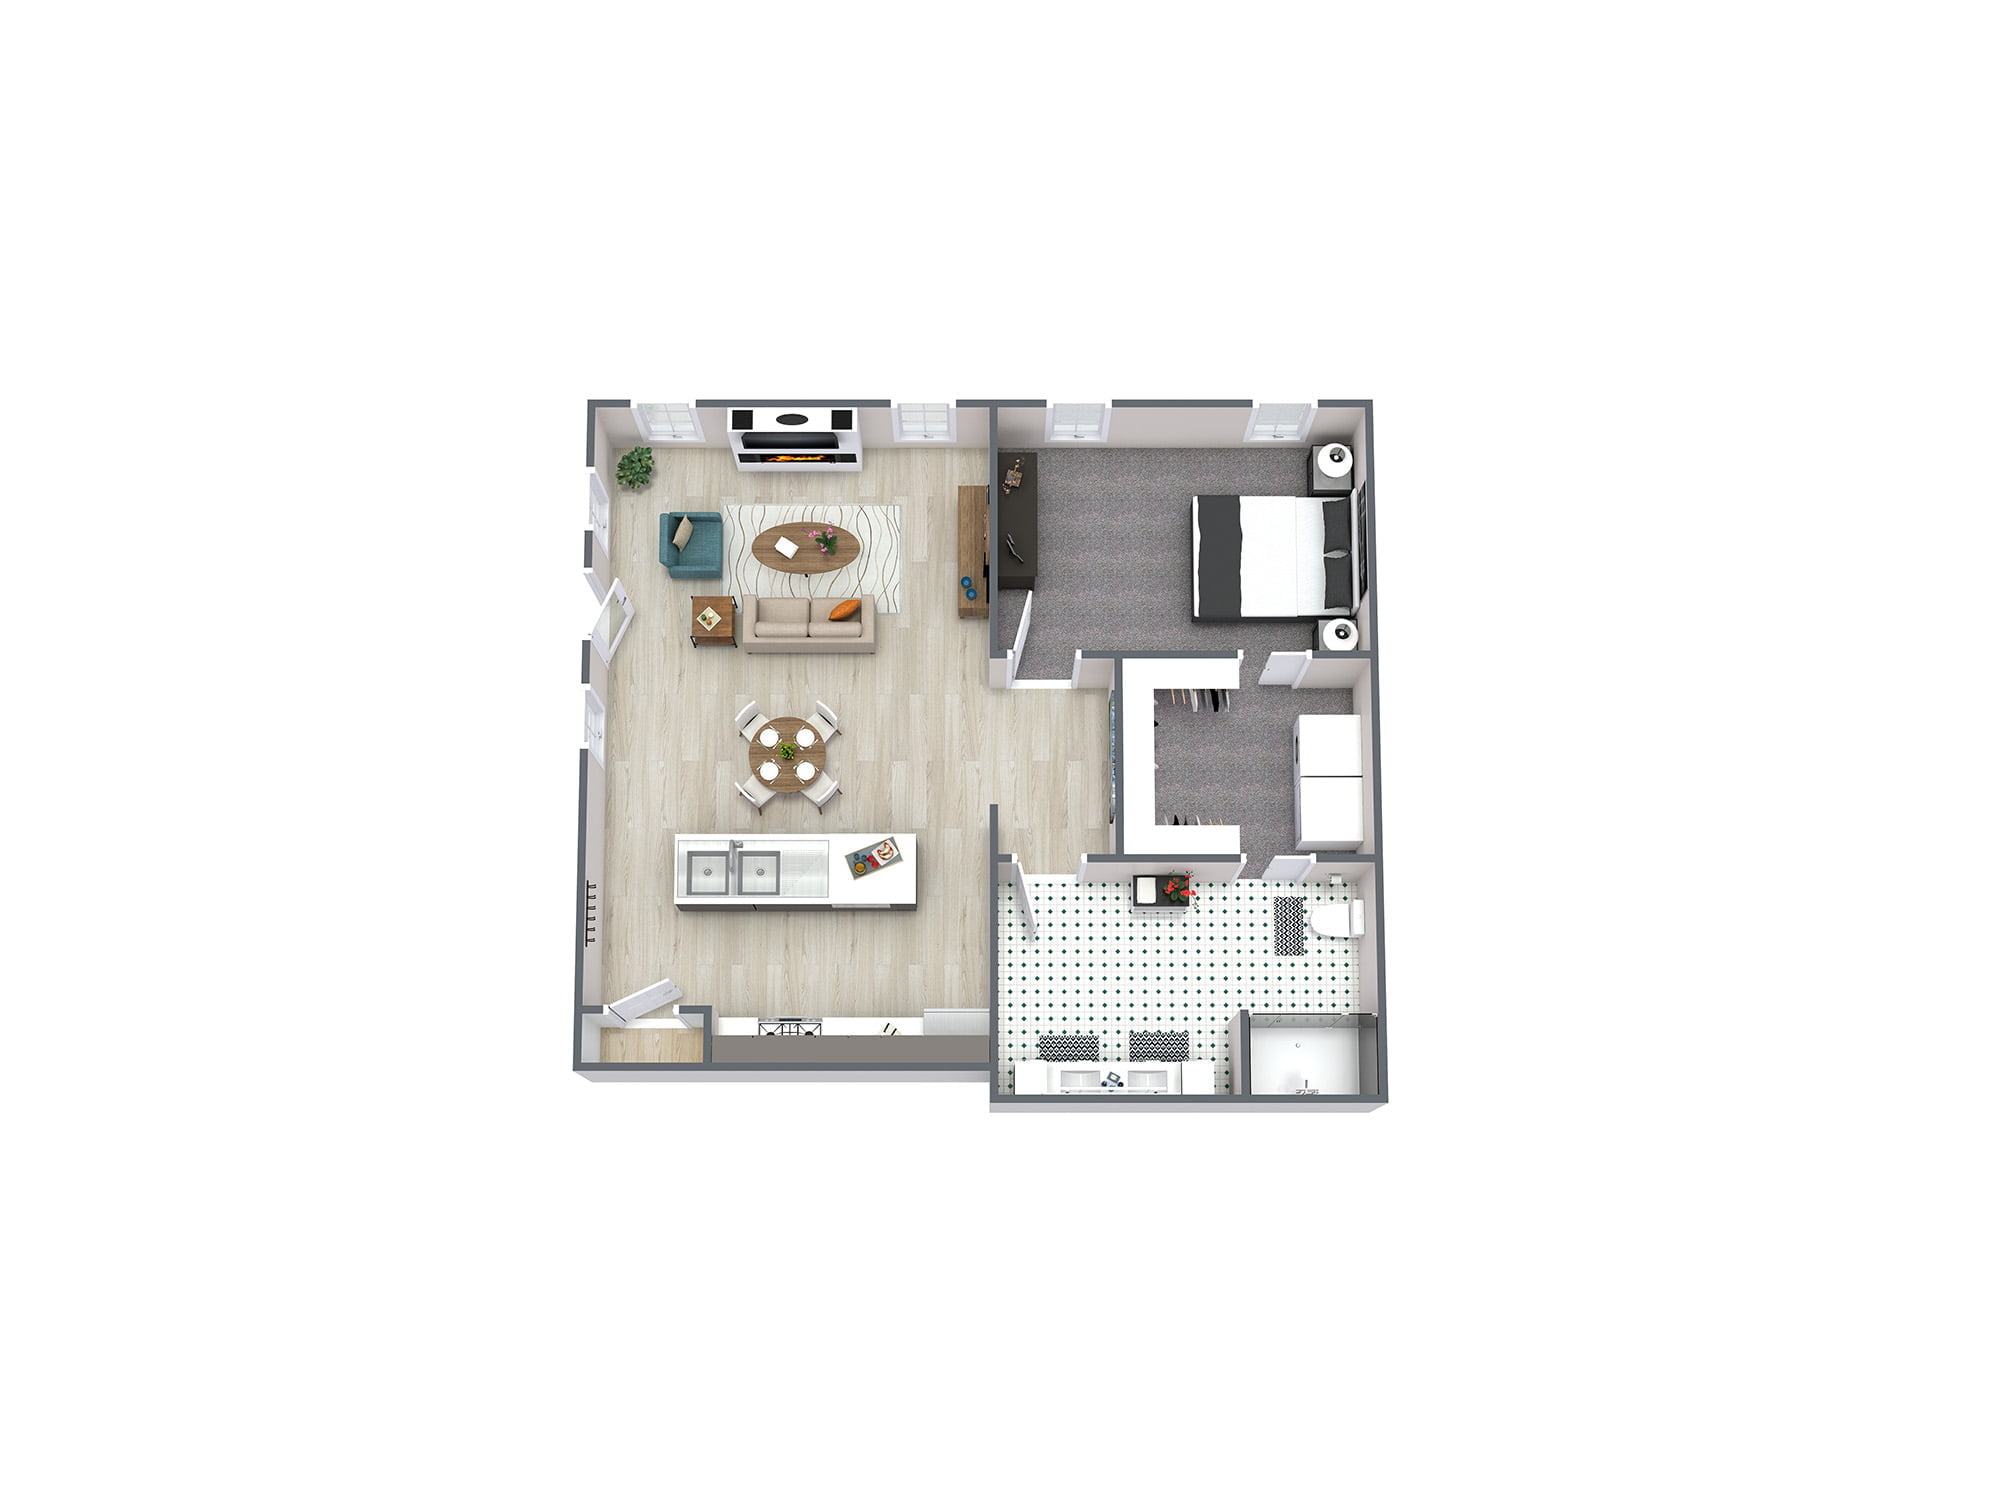 Zinc Floorplan - 1 Bedroom 1 Bathroom - Saratoga Springs, NY